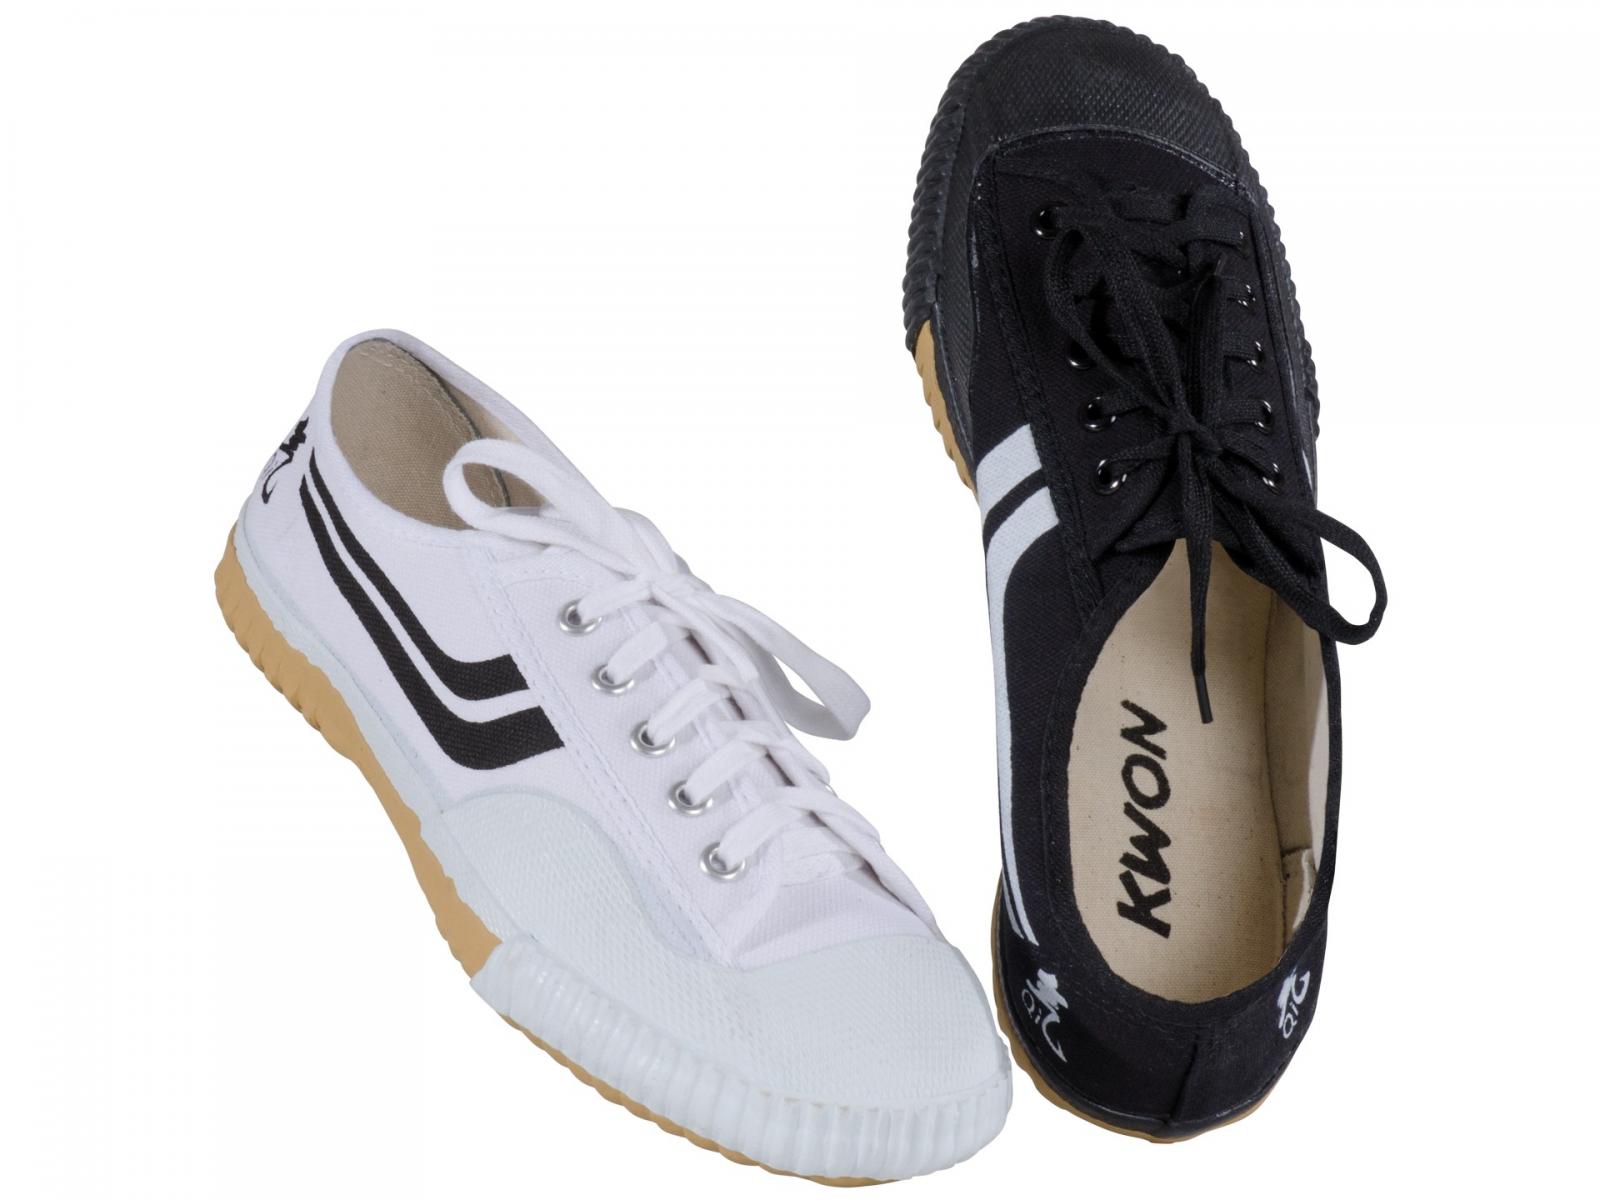 KWON® Chosun Schuhe Sneaker Trainingsschuhe weiß schwarz Kickboxen Karate TKD